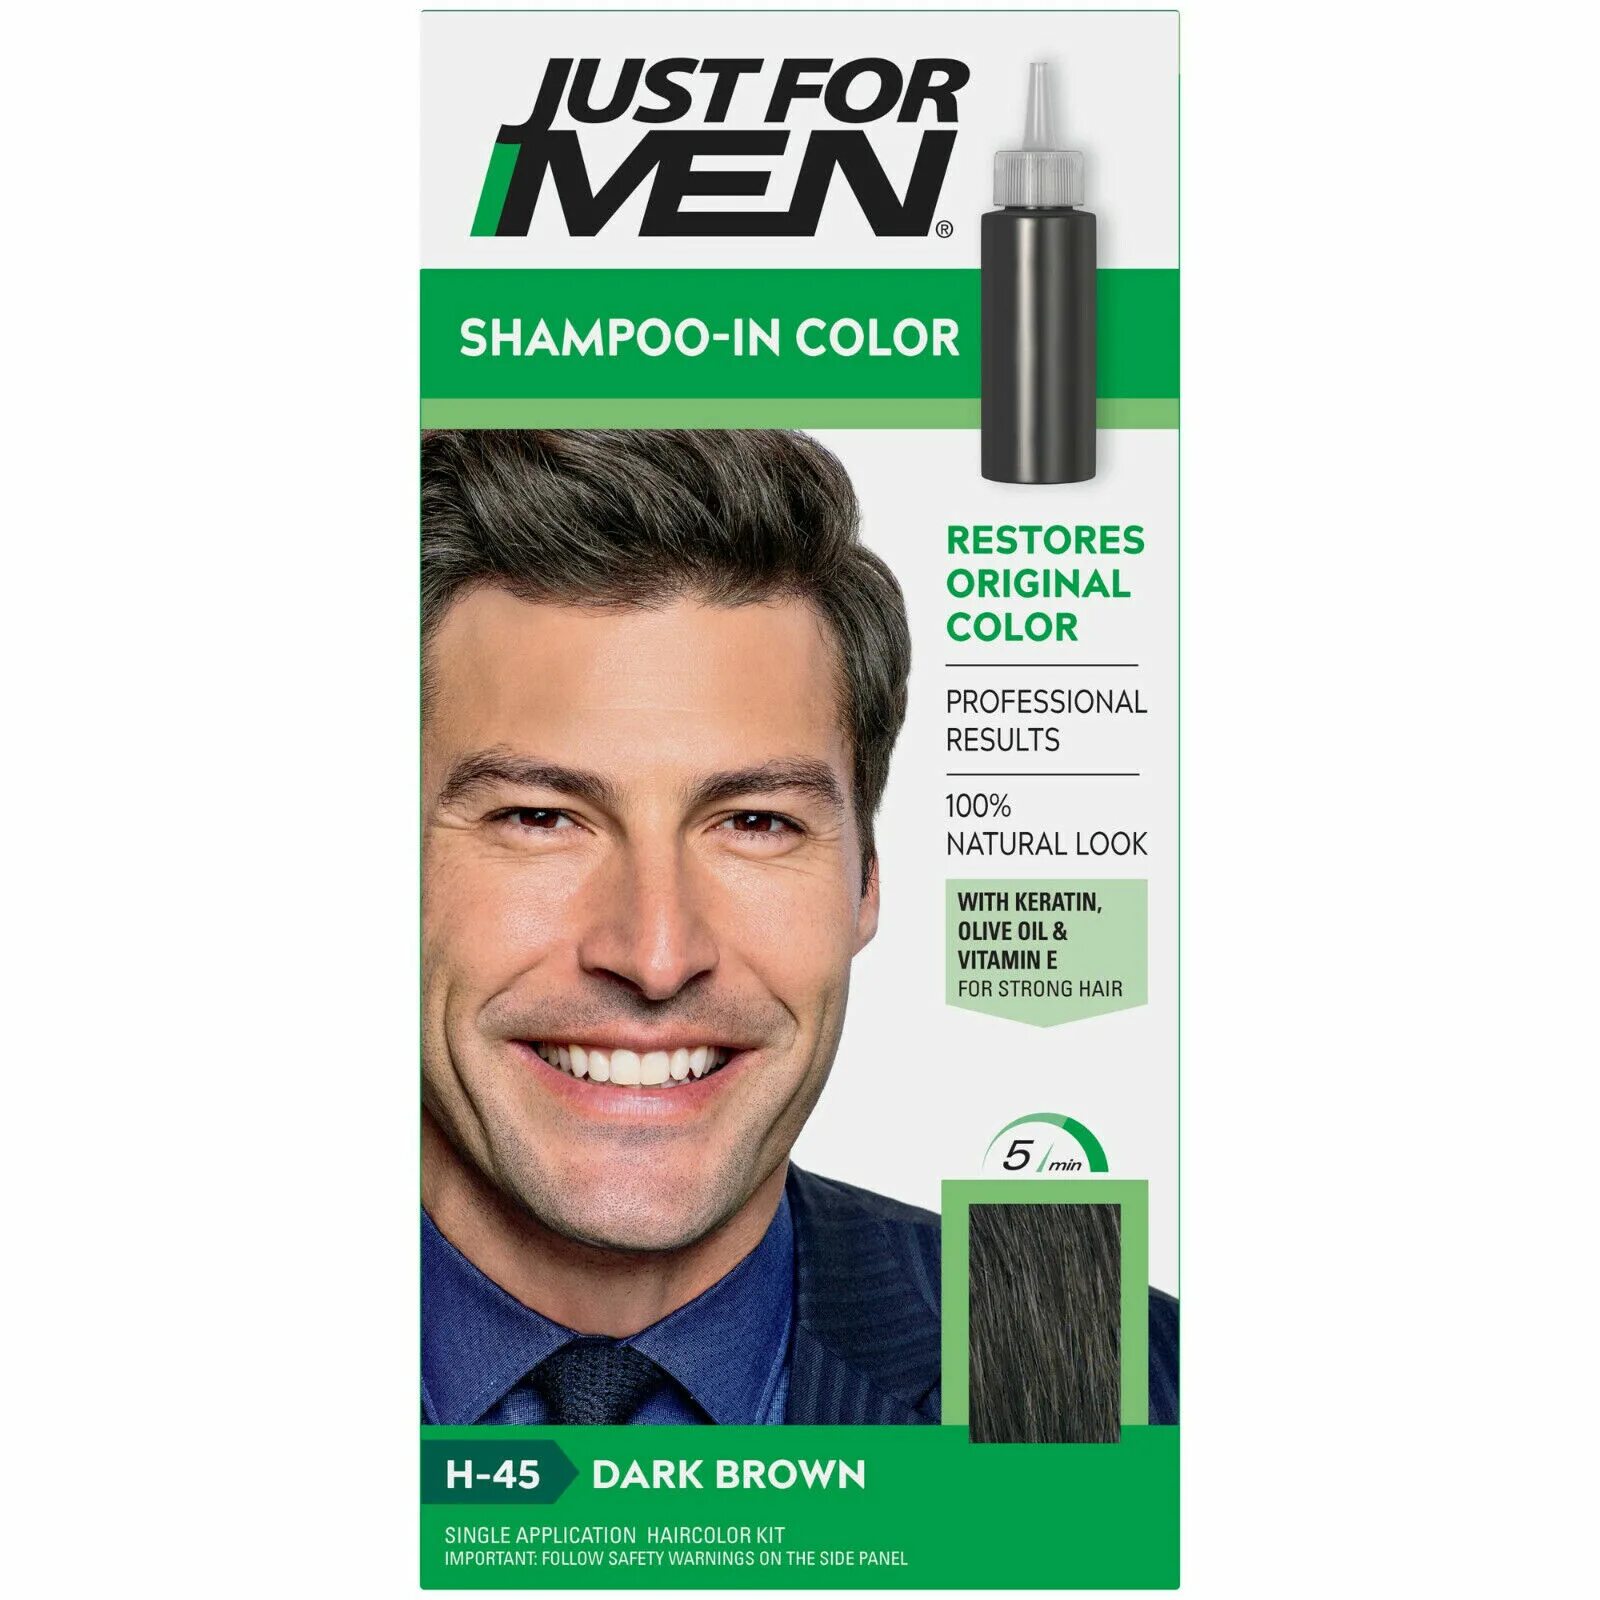 Just for men. Shampoo for men. Combe just for men Shampoo-in Haircolor отзывы. Just for men 5 minutes hair Ink.